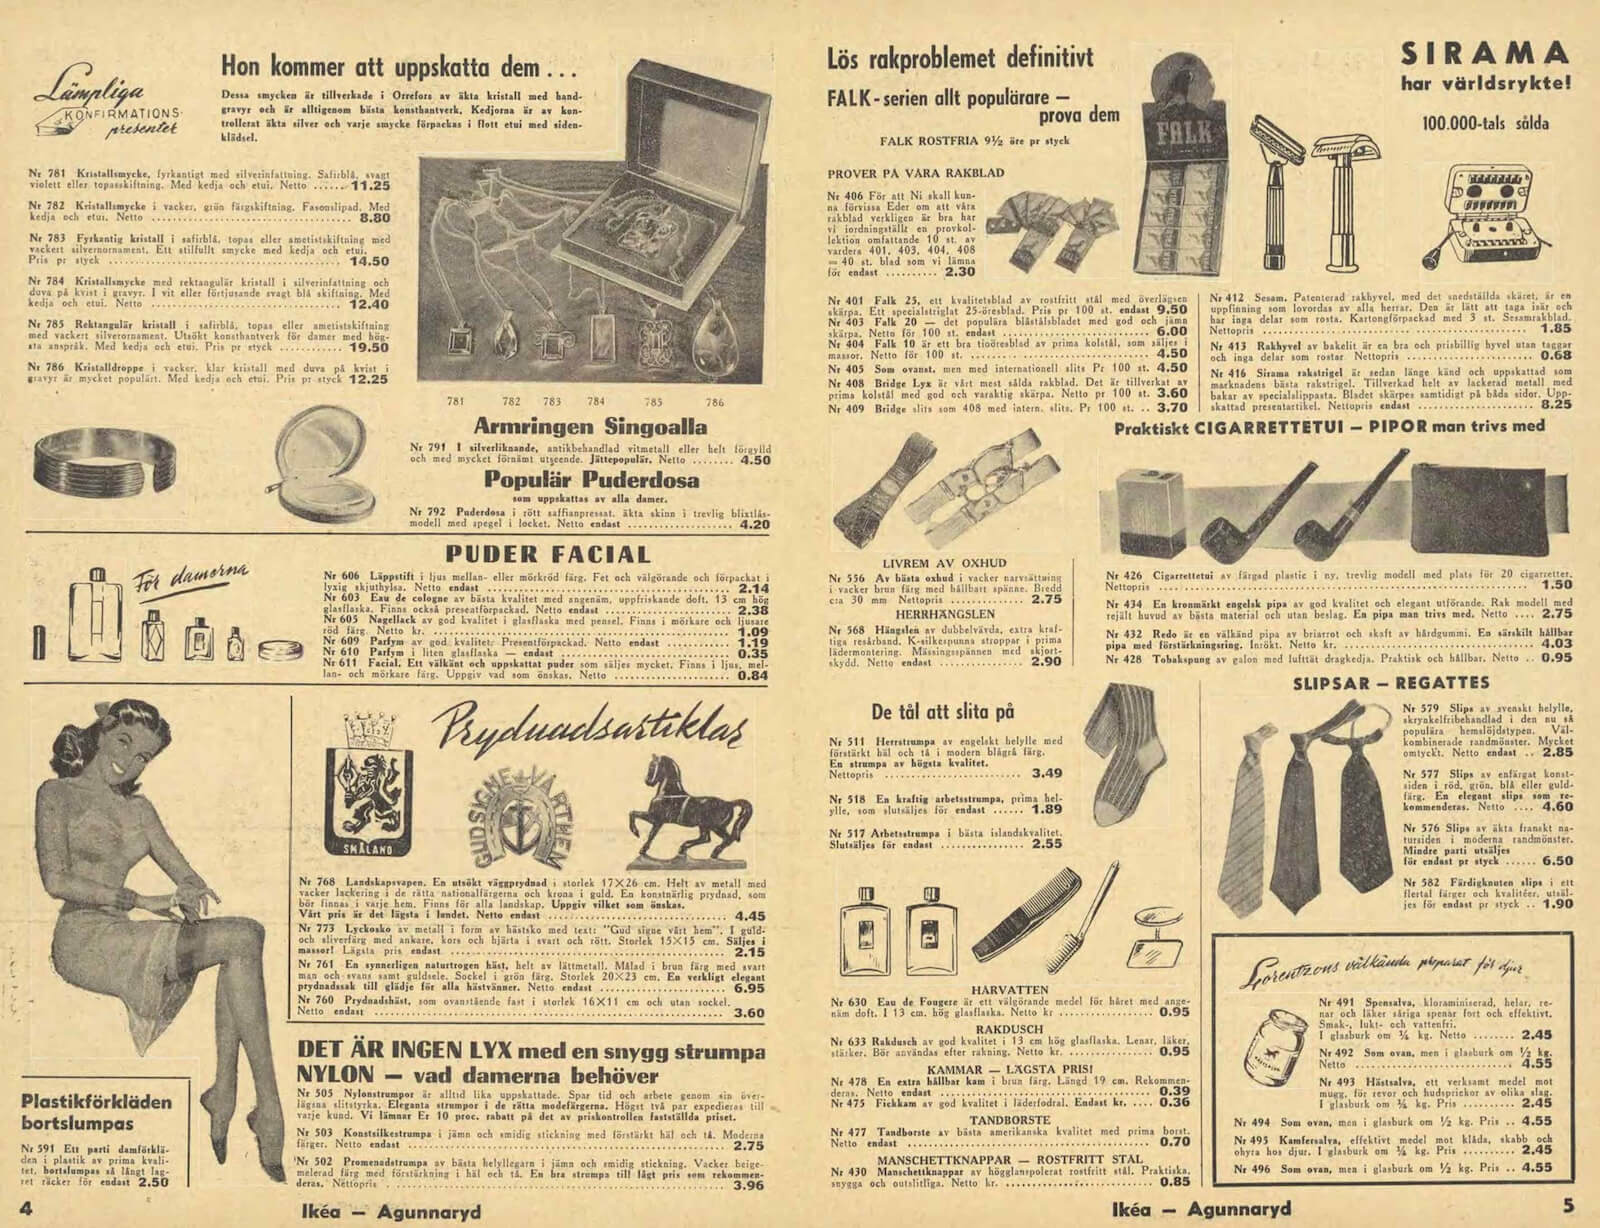 Open 1950 IKEA catalog showcasing vintage furniture designs.